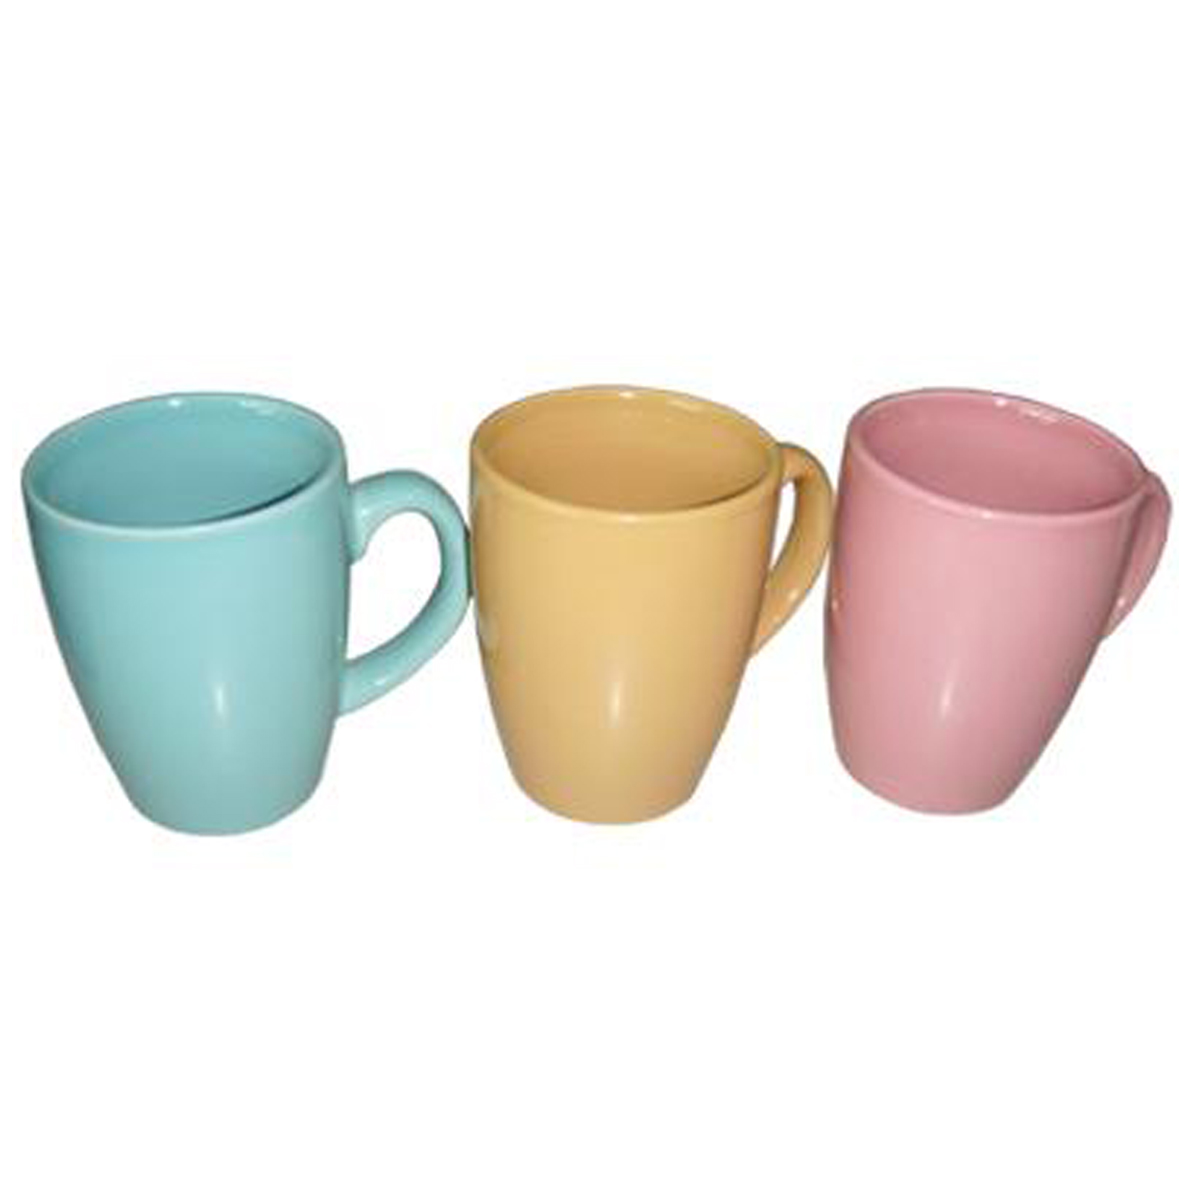 Color glazed ceramic mug